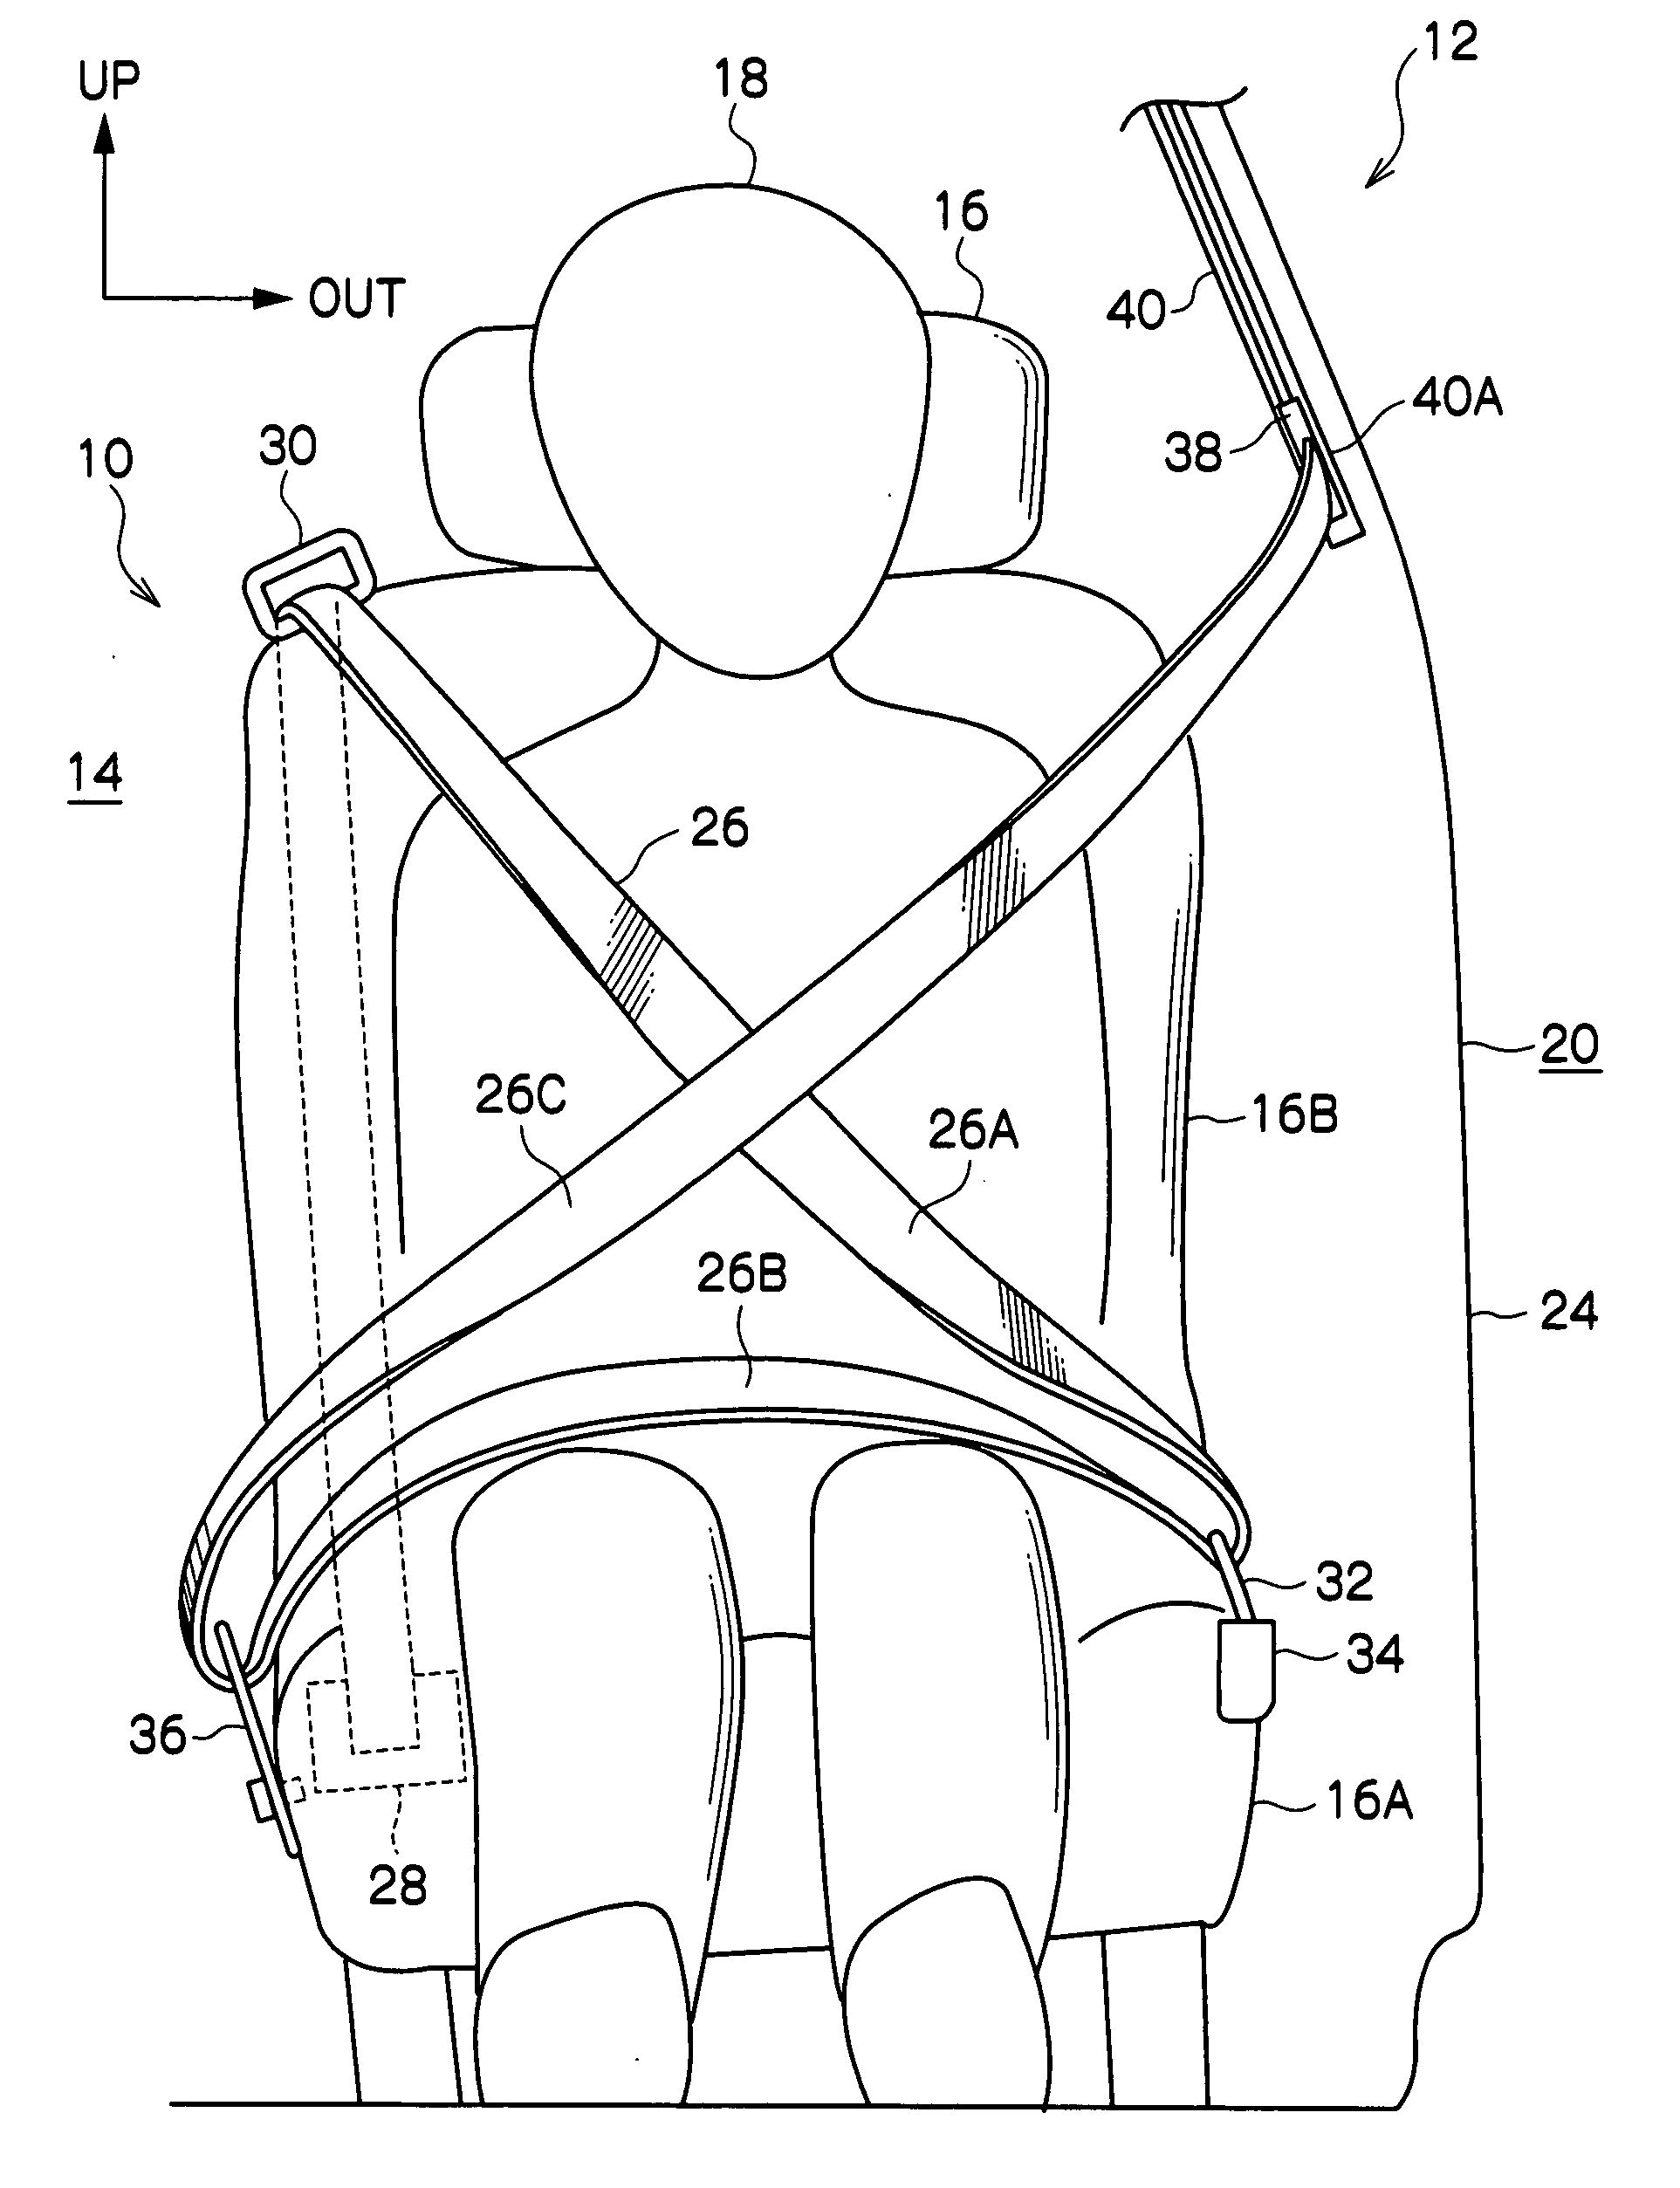 Seatbelt device and vehicle